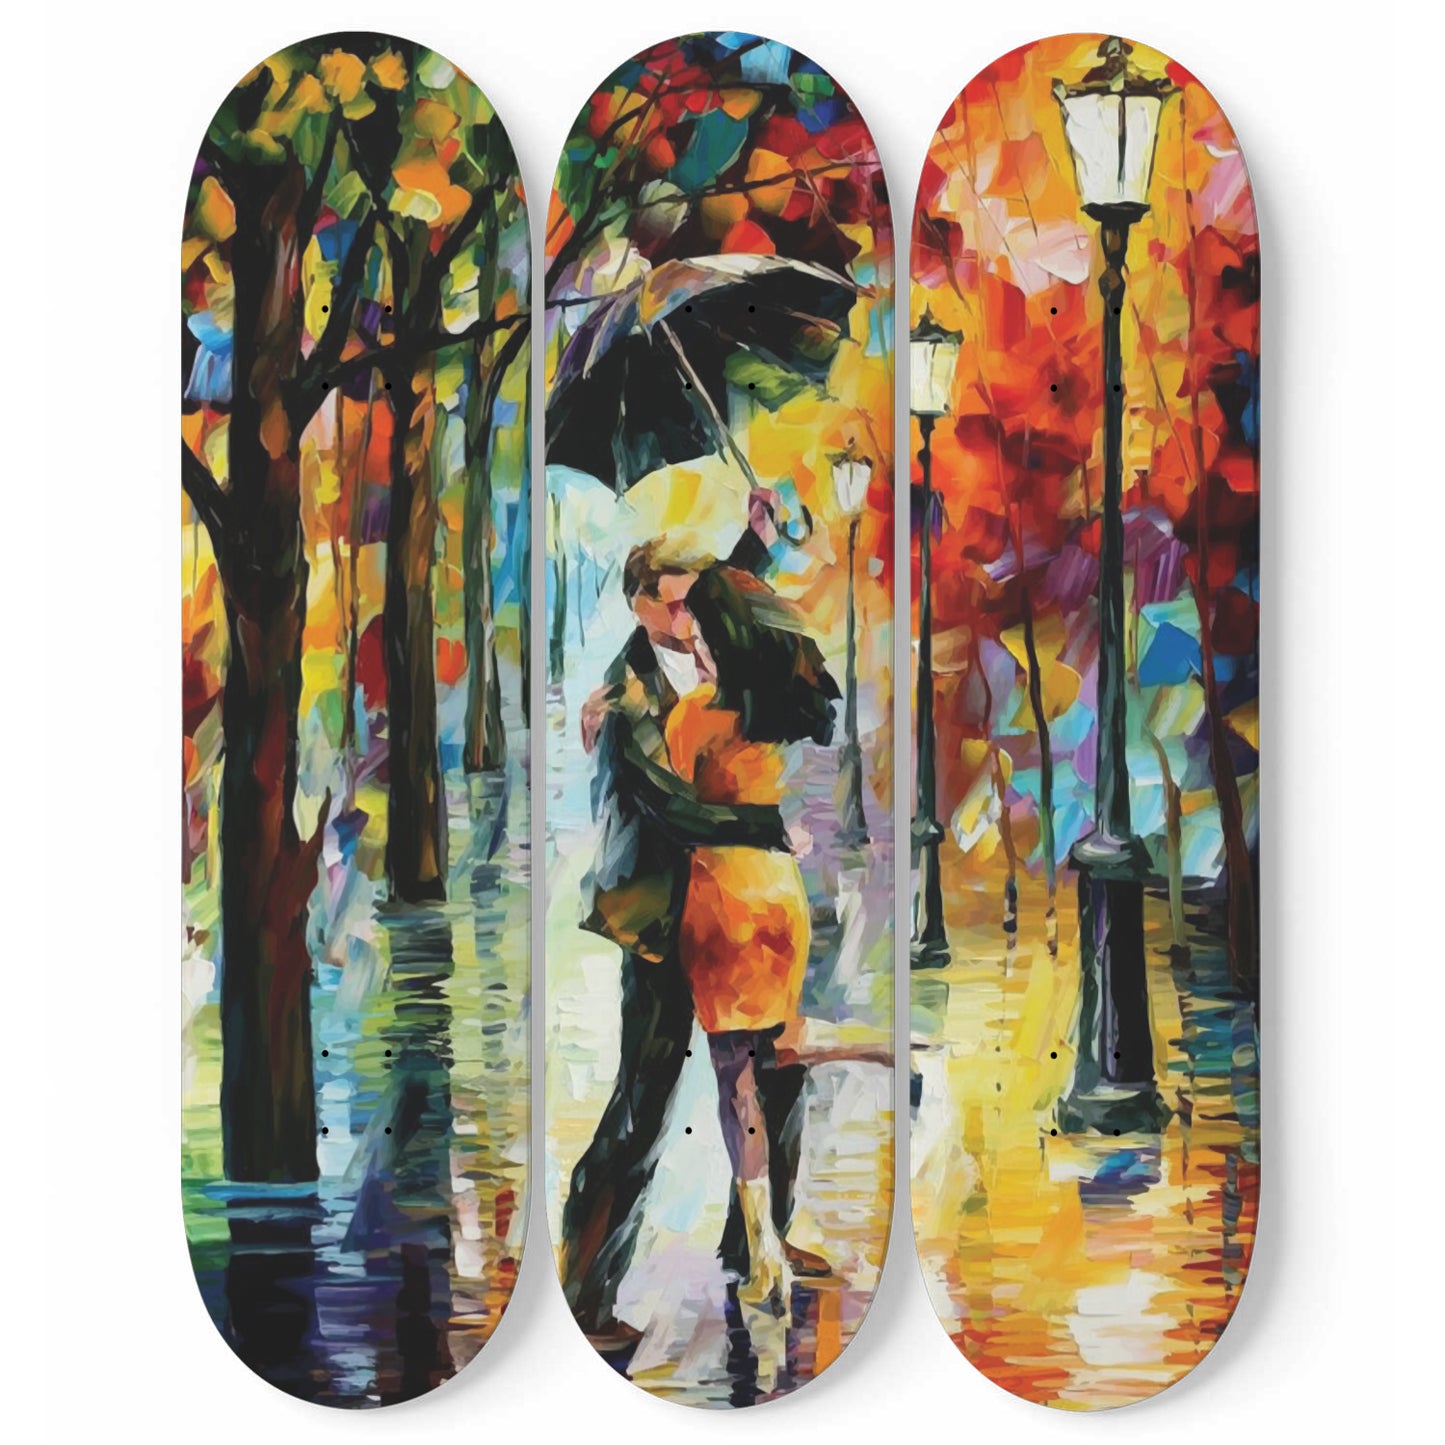 Dancing in the rain | Skateboard Deck Wall Art